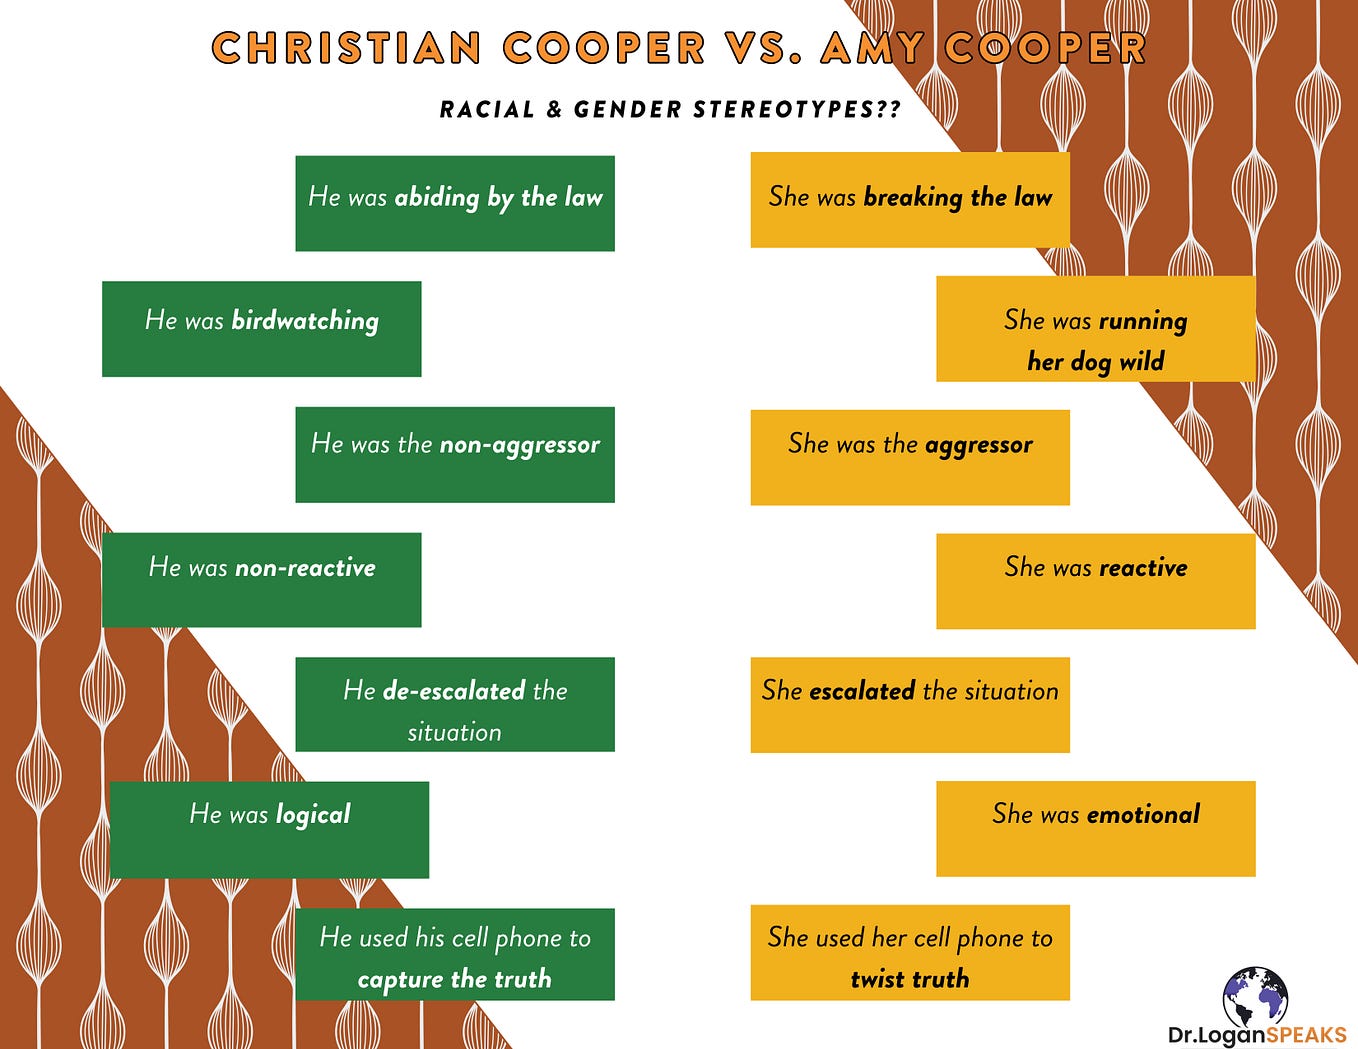 Christian Cooper vs. Amy Cooper